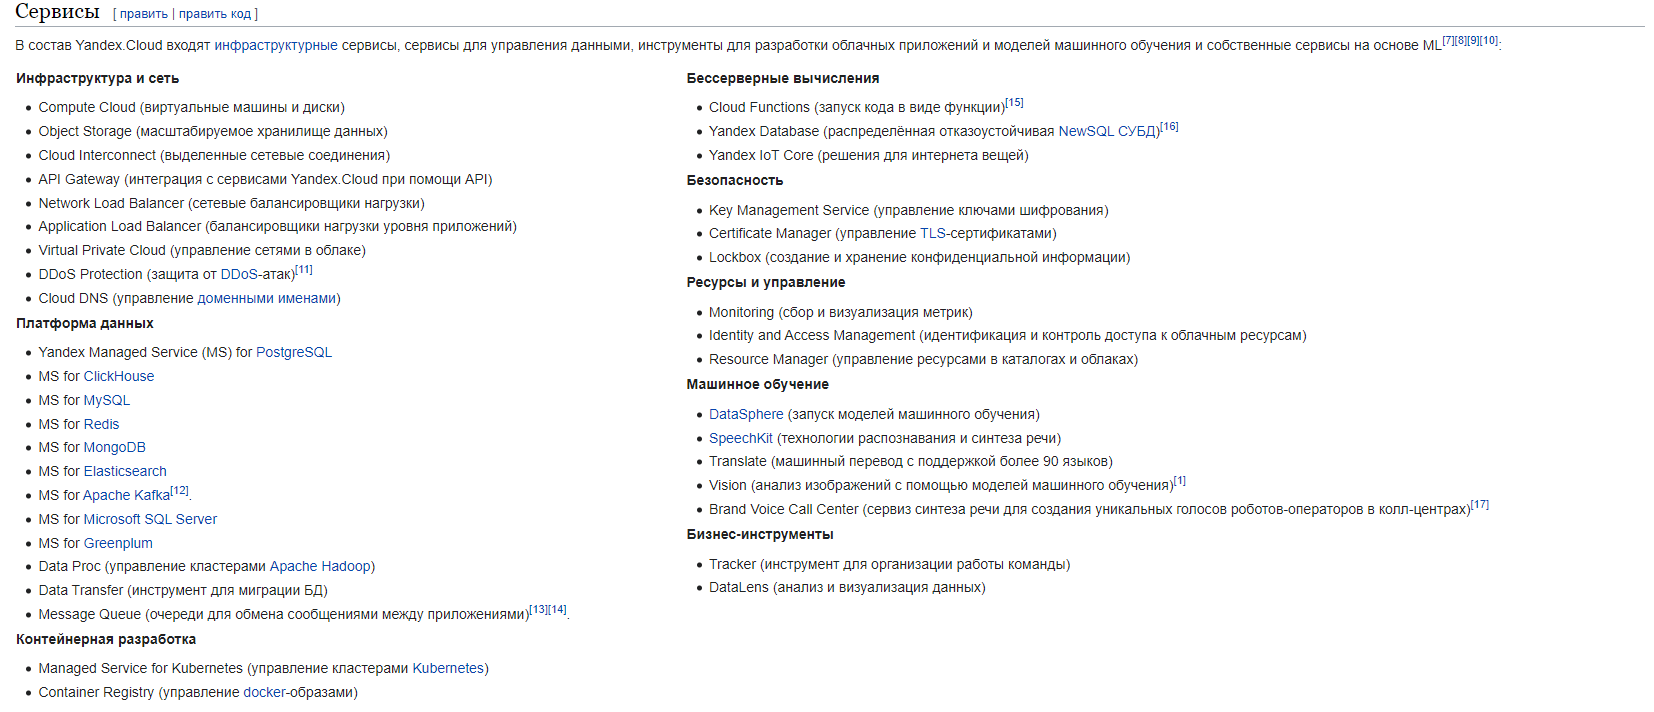 https://ru.wikipedia.org/wiki/Yandex_Cloud